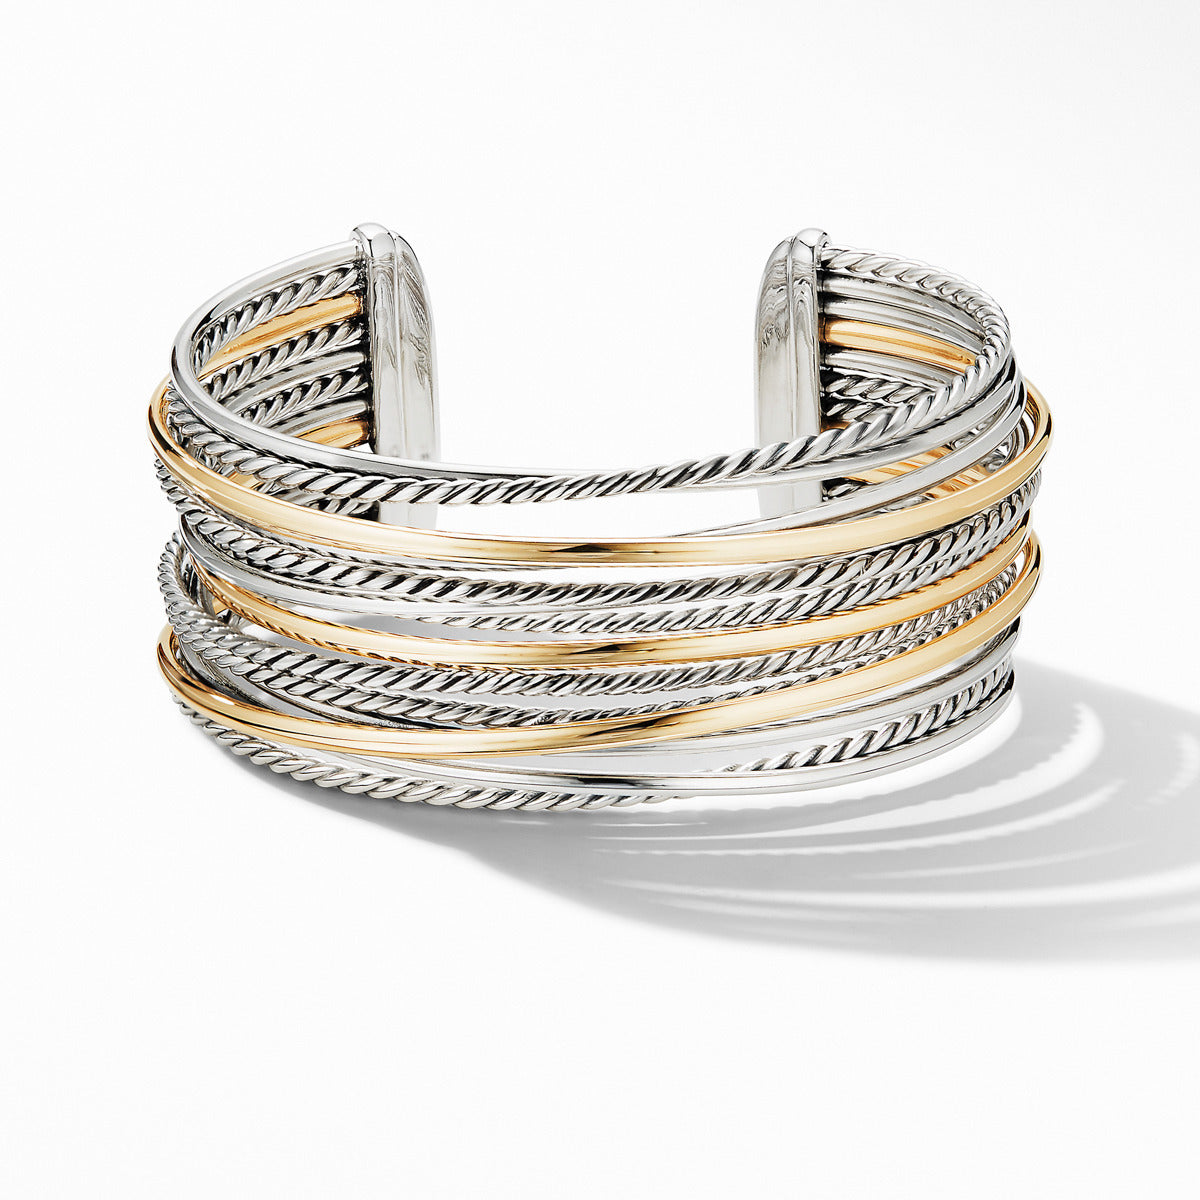 DAVID YURMAN, Crossover Wide Cuff Bracelet with 18K Yellow Gold